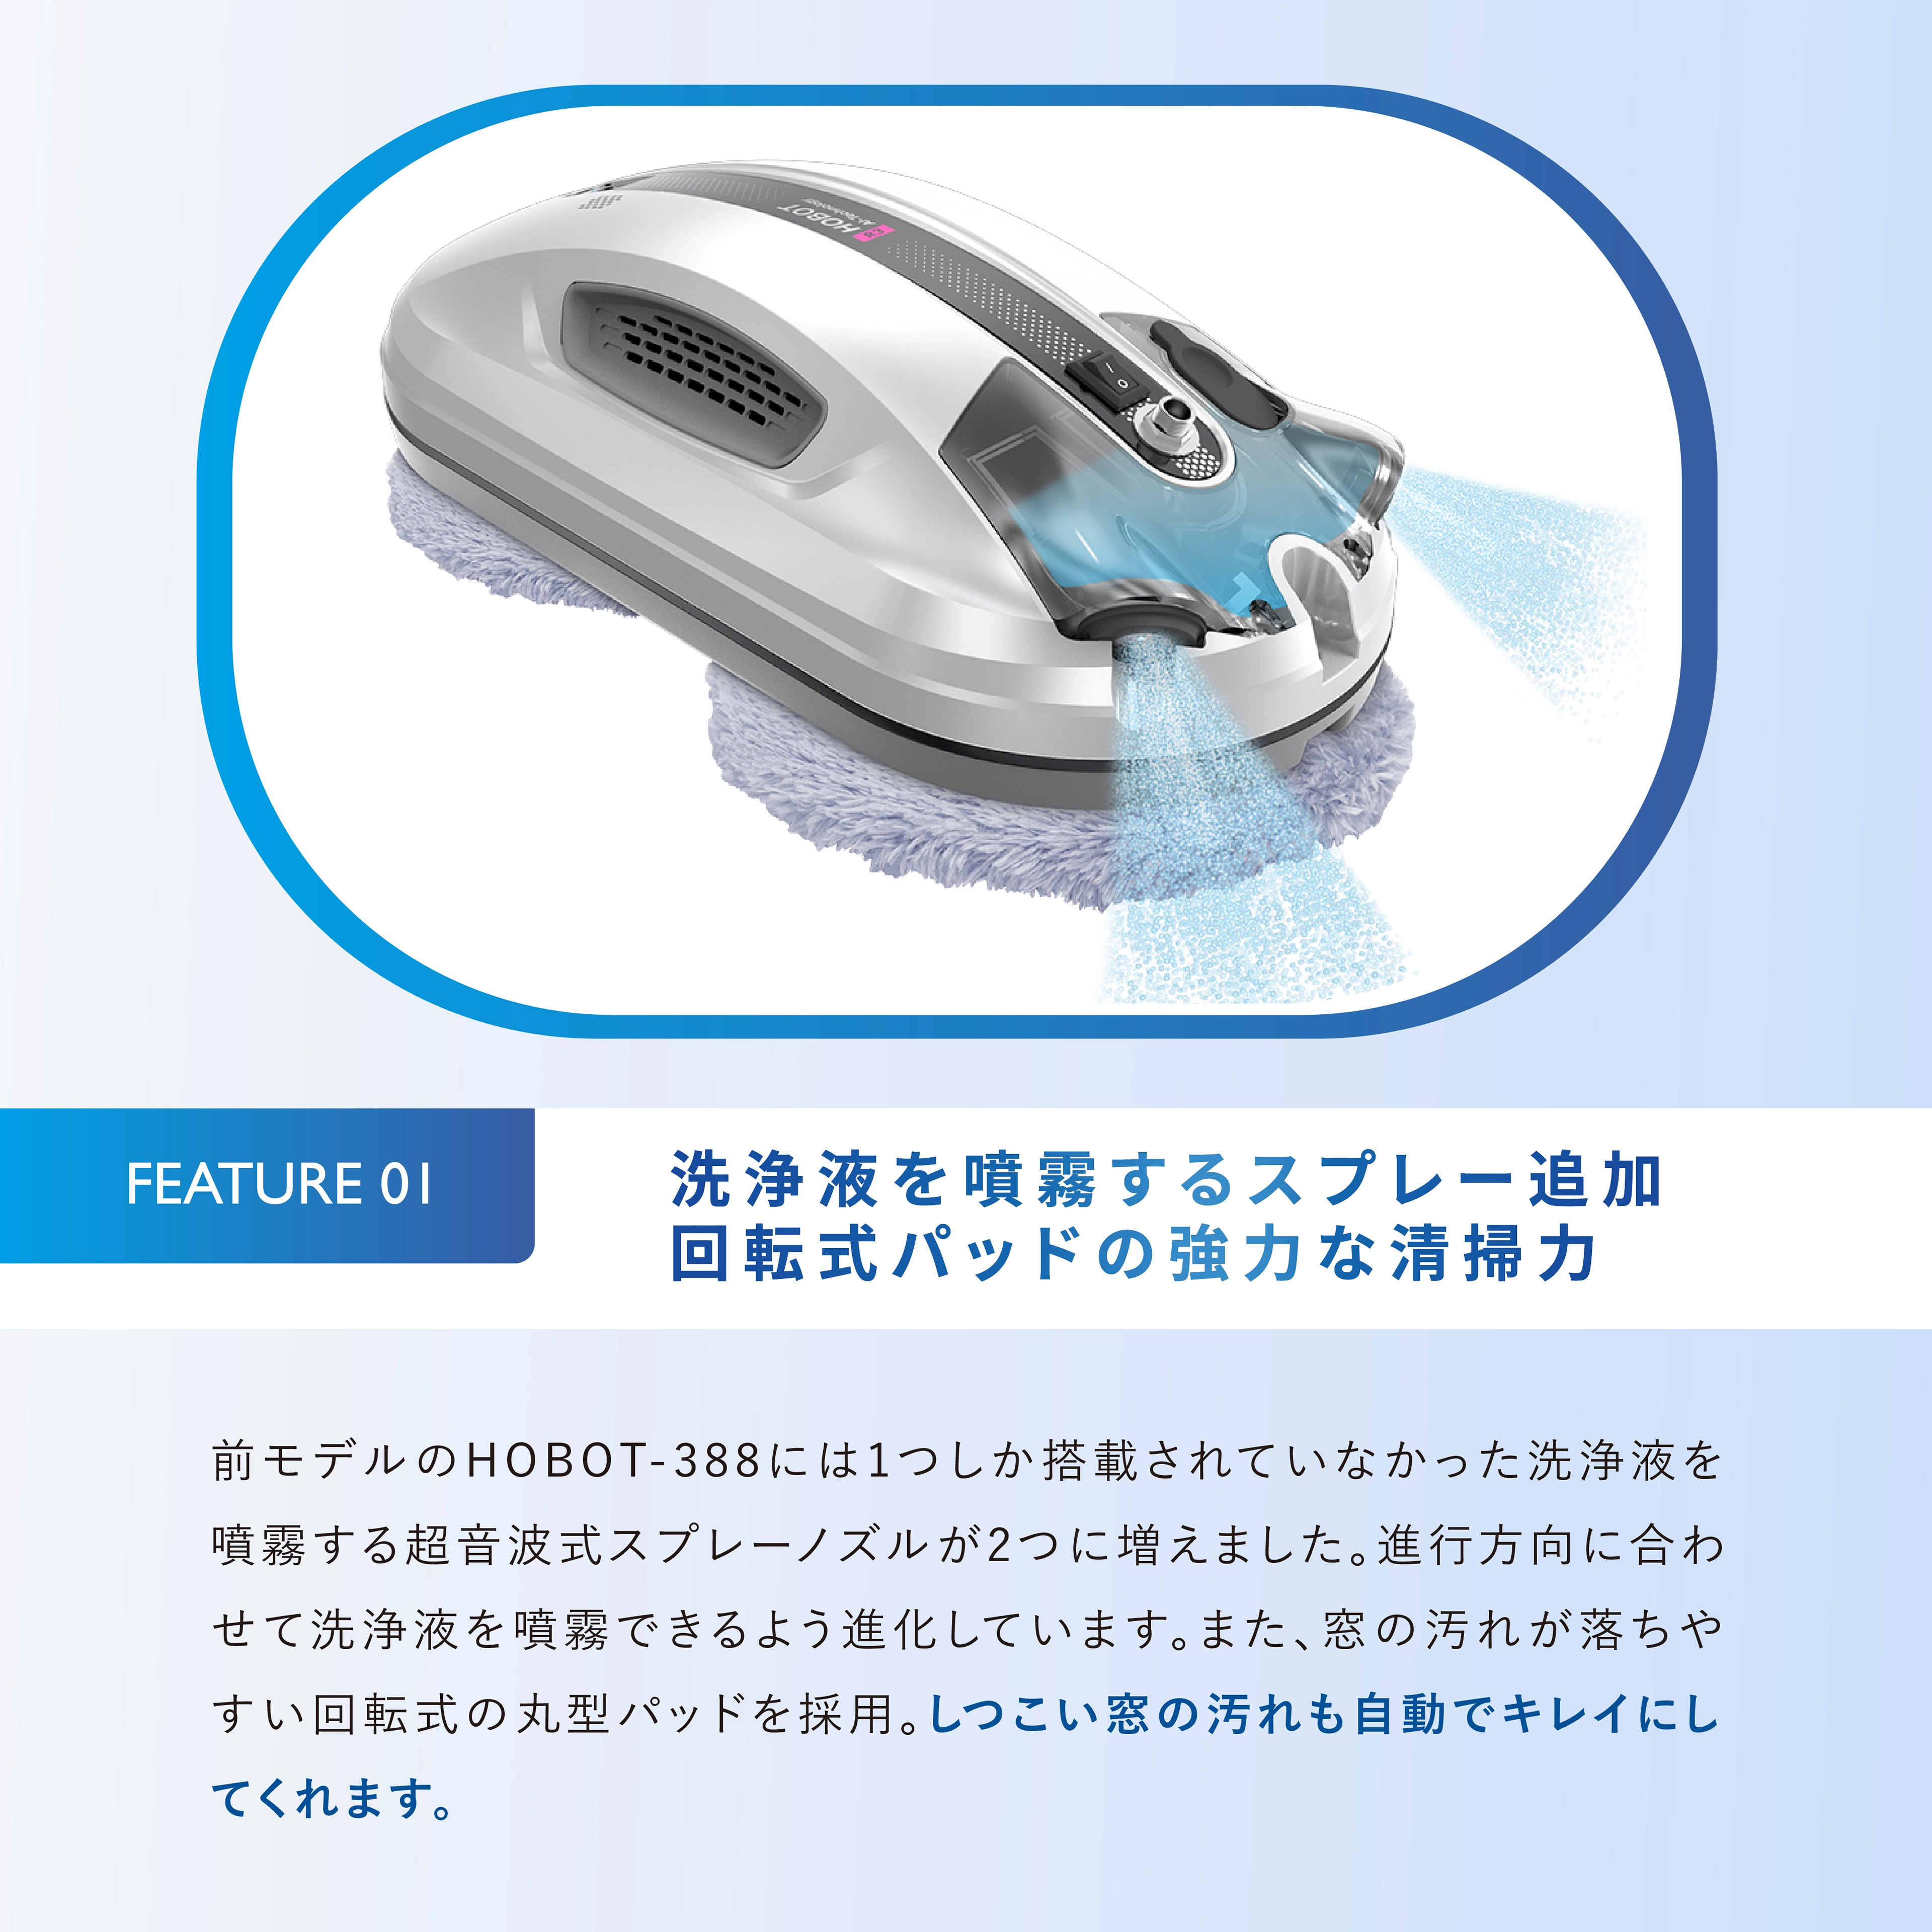 HOBOT公式ショップ  HOBOT-R3  窓拭きロボット  AI搭載  強力吸引  日本語対応  メーカ1年保証  回転式  水拭き  乾拭き